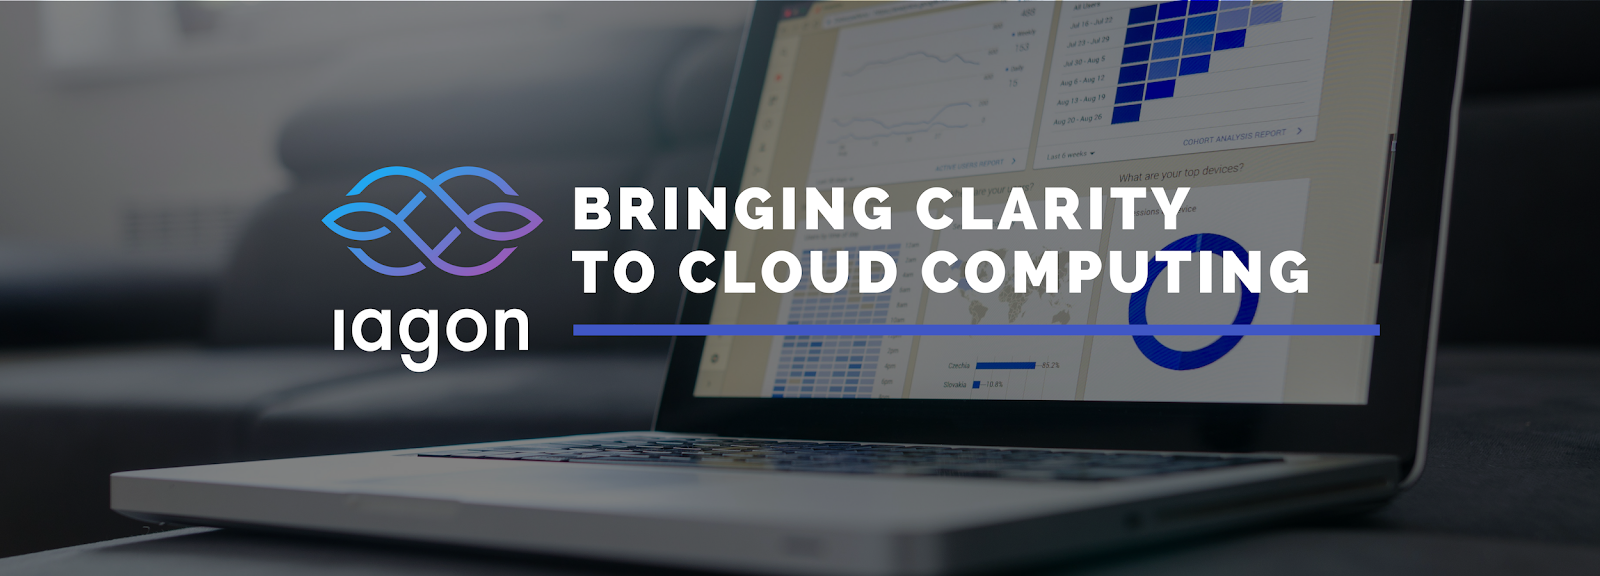 IAGON: Bringing Clarity to Cloud Computing